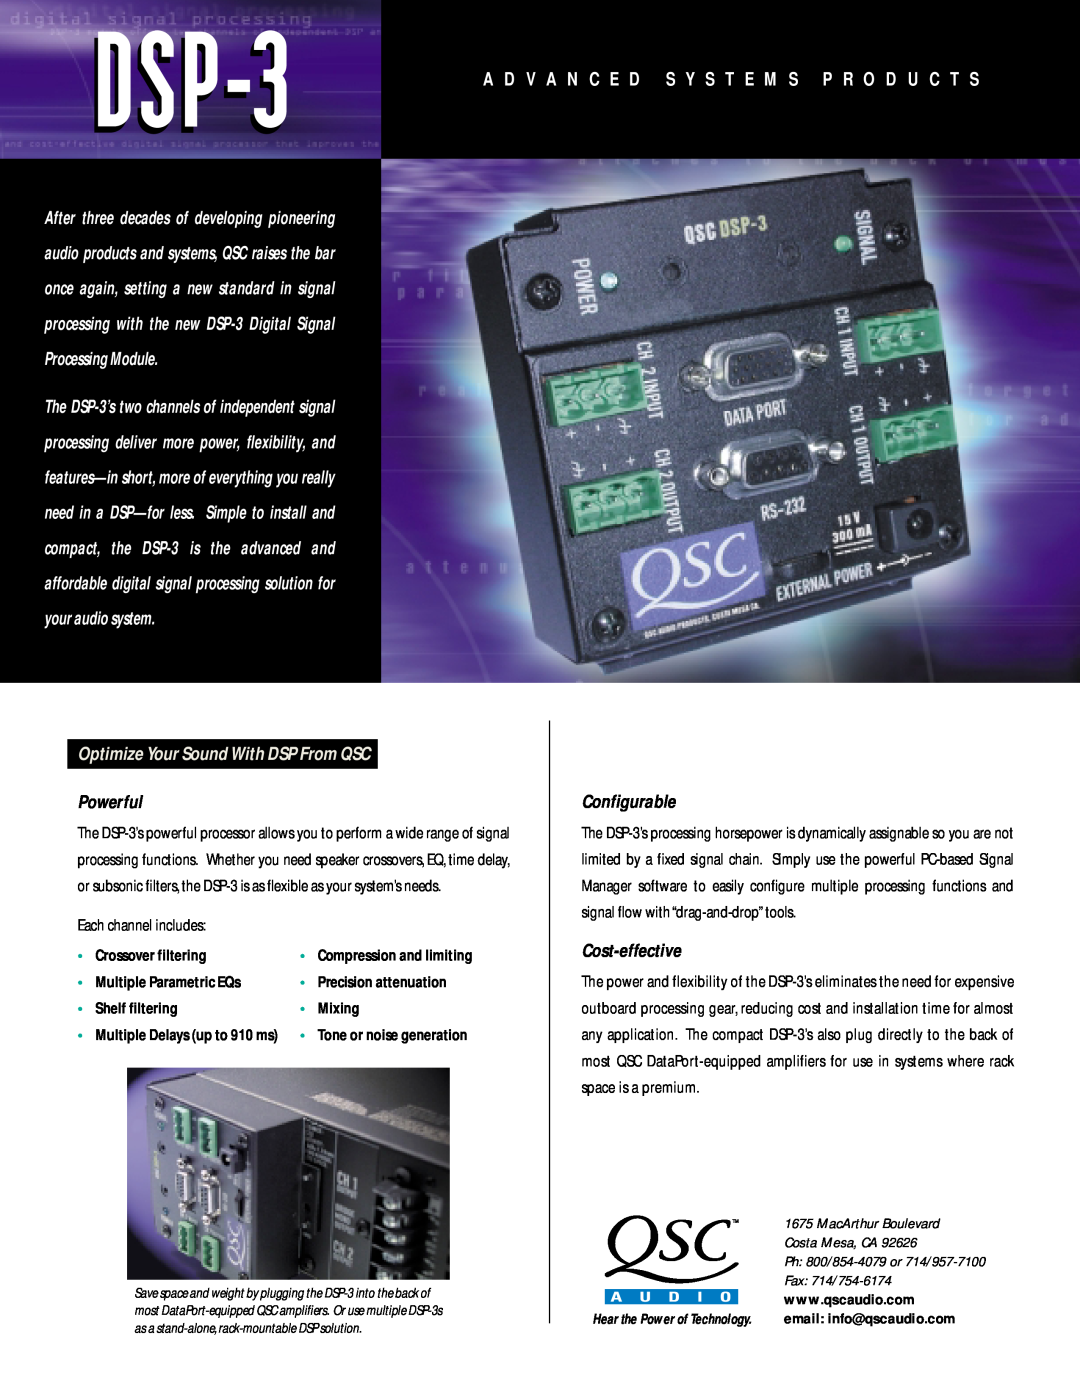 QSC Audio manual Amplifier Accessory Hardware Manual, DSP-3 Digital Signal Processor, TD-000087-00* TD-000087-00, Rev.D 